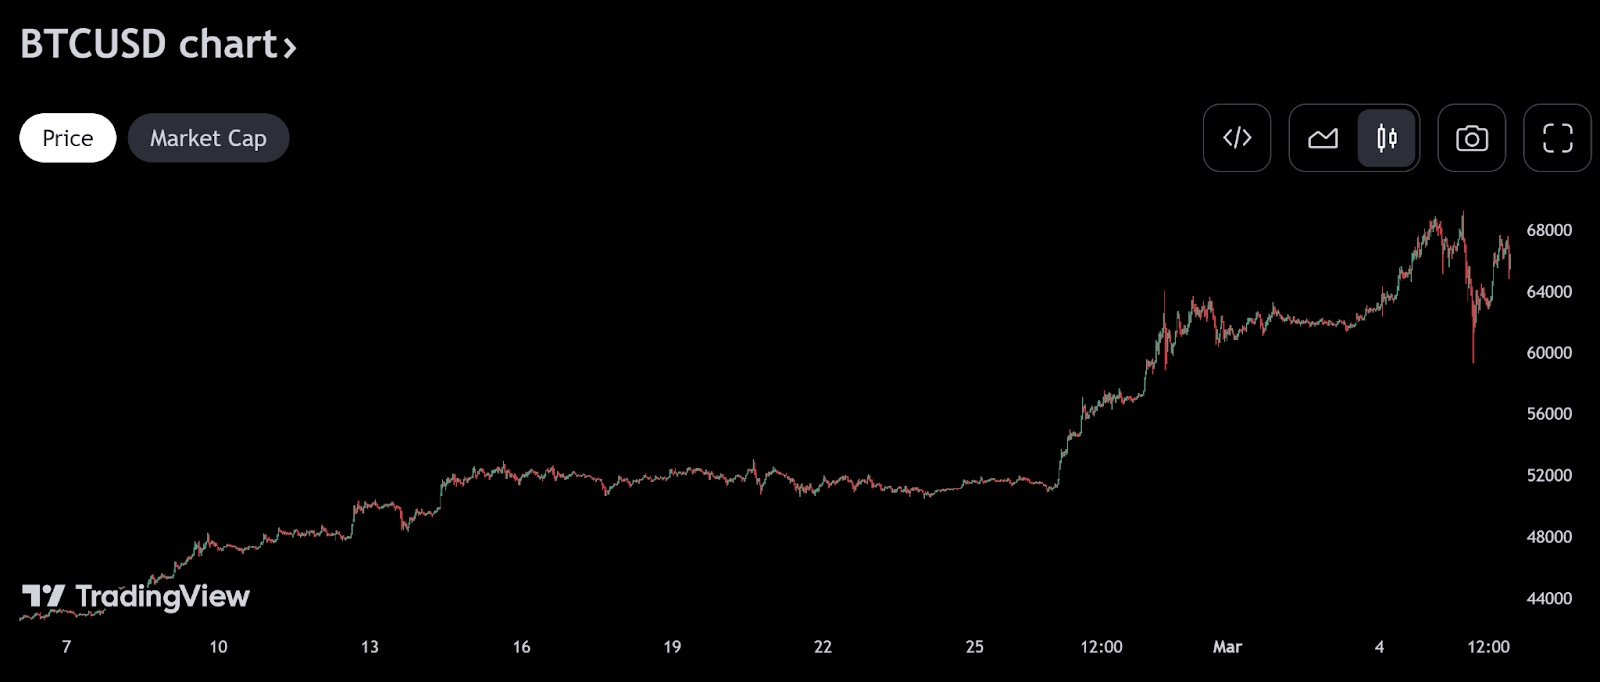 BTC USD 1 Month Chart via TradingView